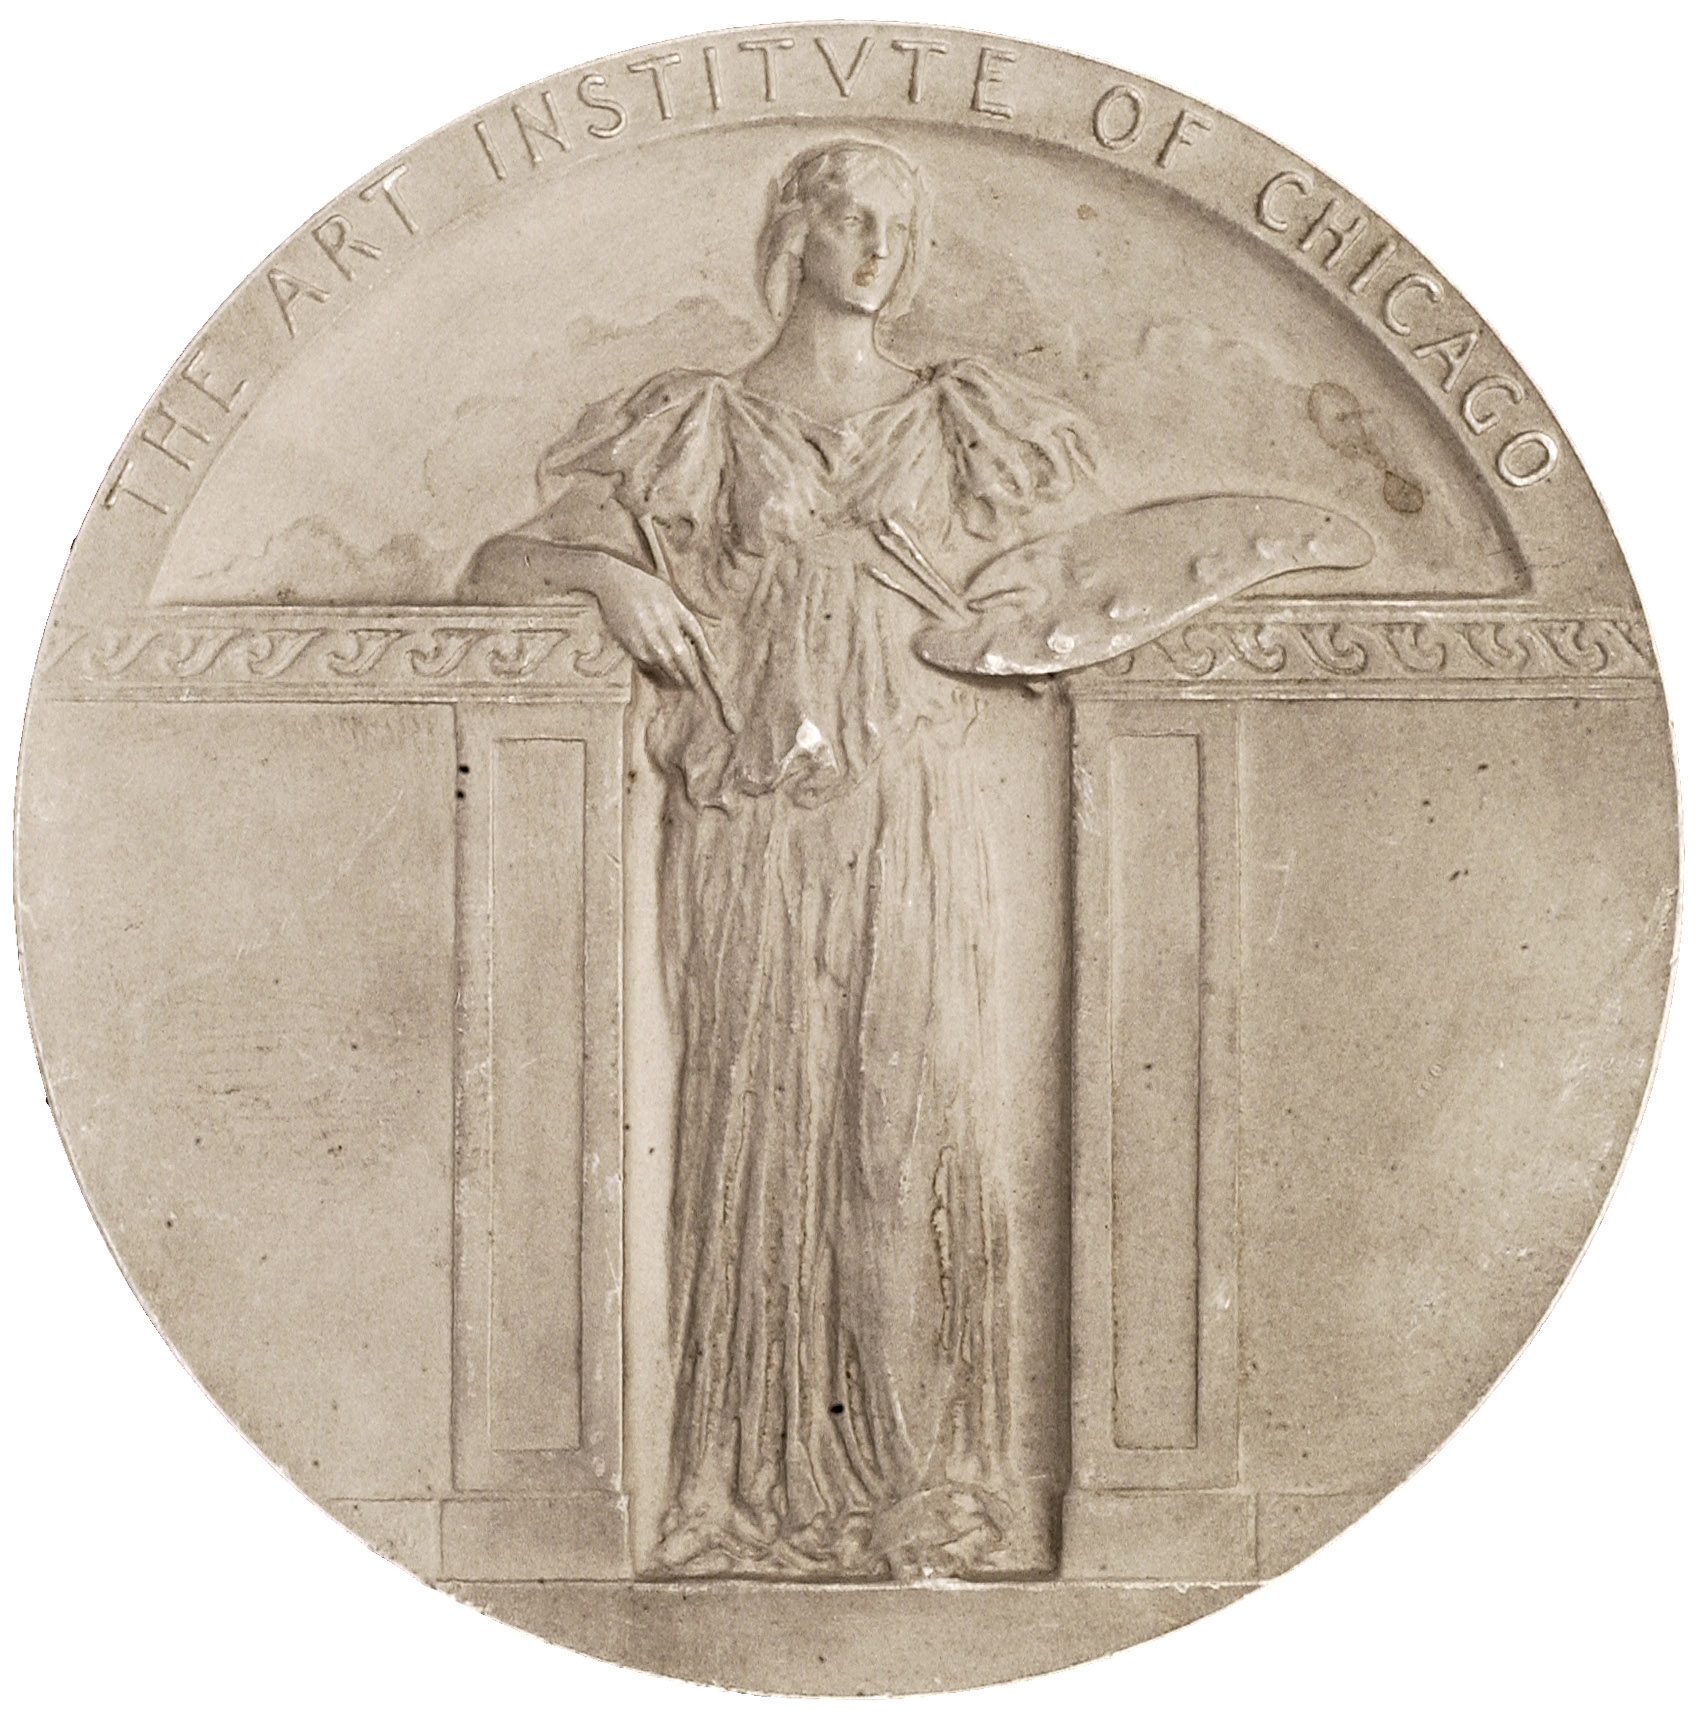 Hahlo-125-133, Norman Wait Harris medal